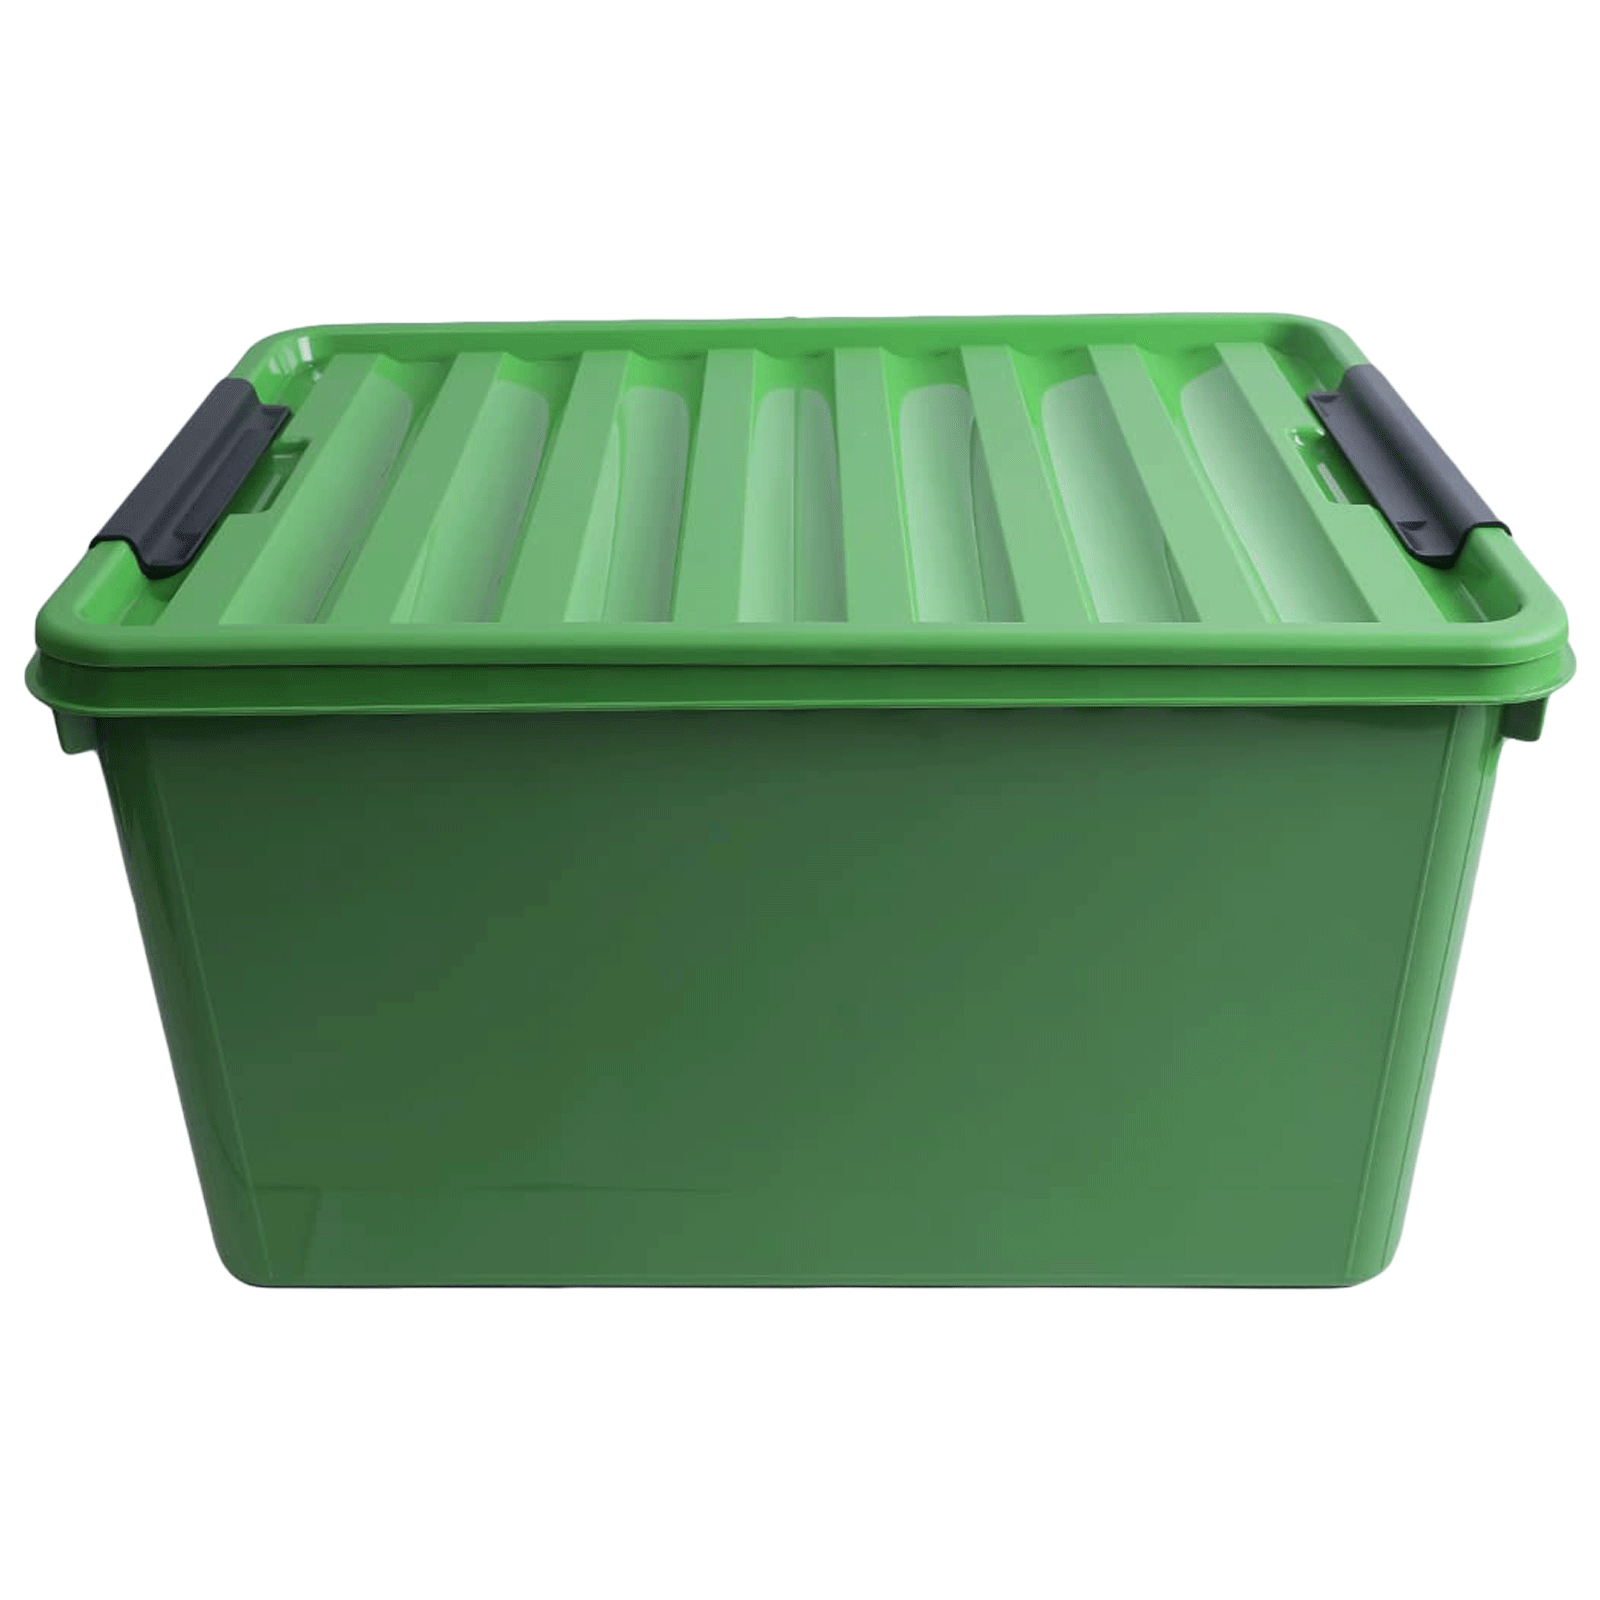 Lock & Lock Inplus 40 Litre Rectangular Plastic Storage Container (Easy Clip, INP114GN, Green)_1